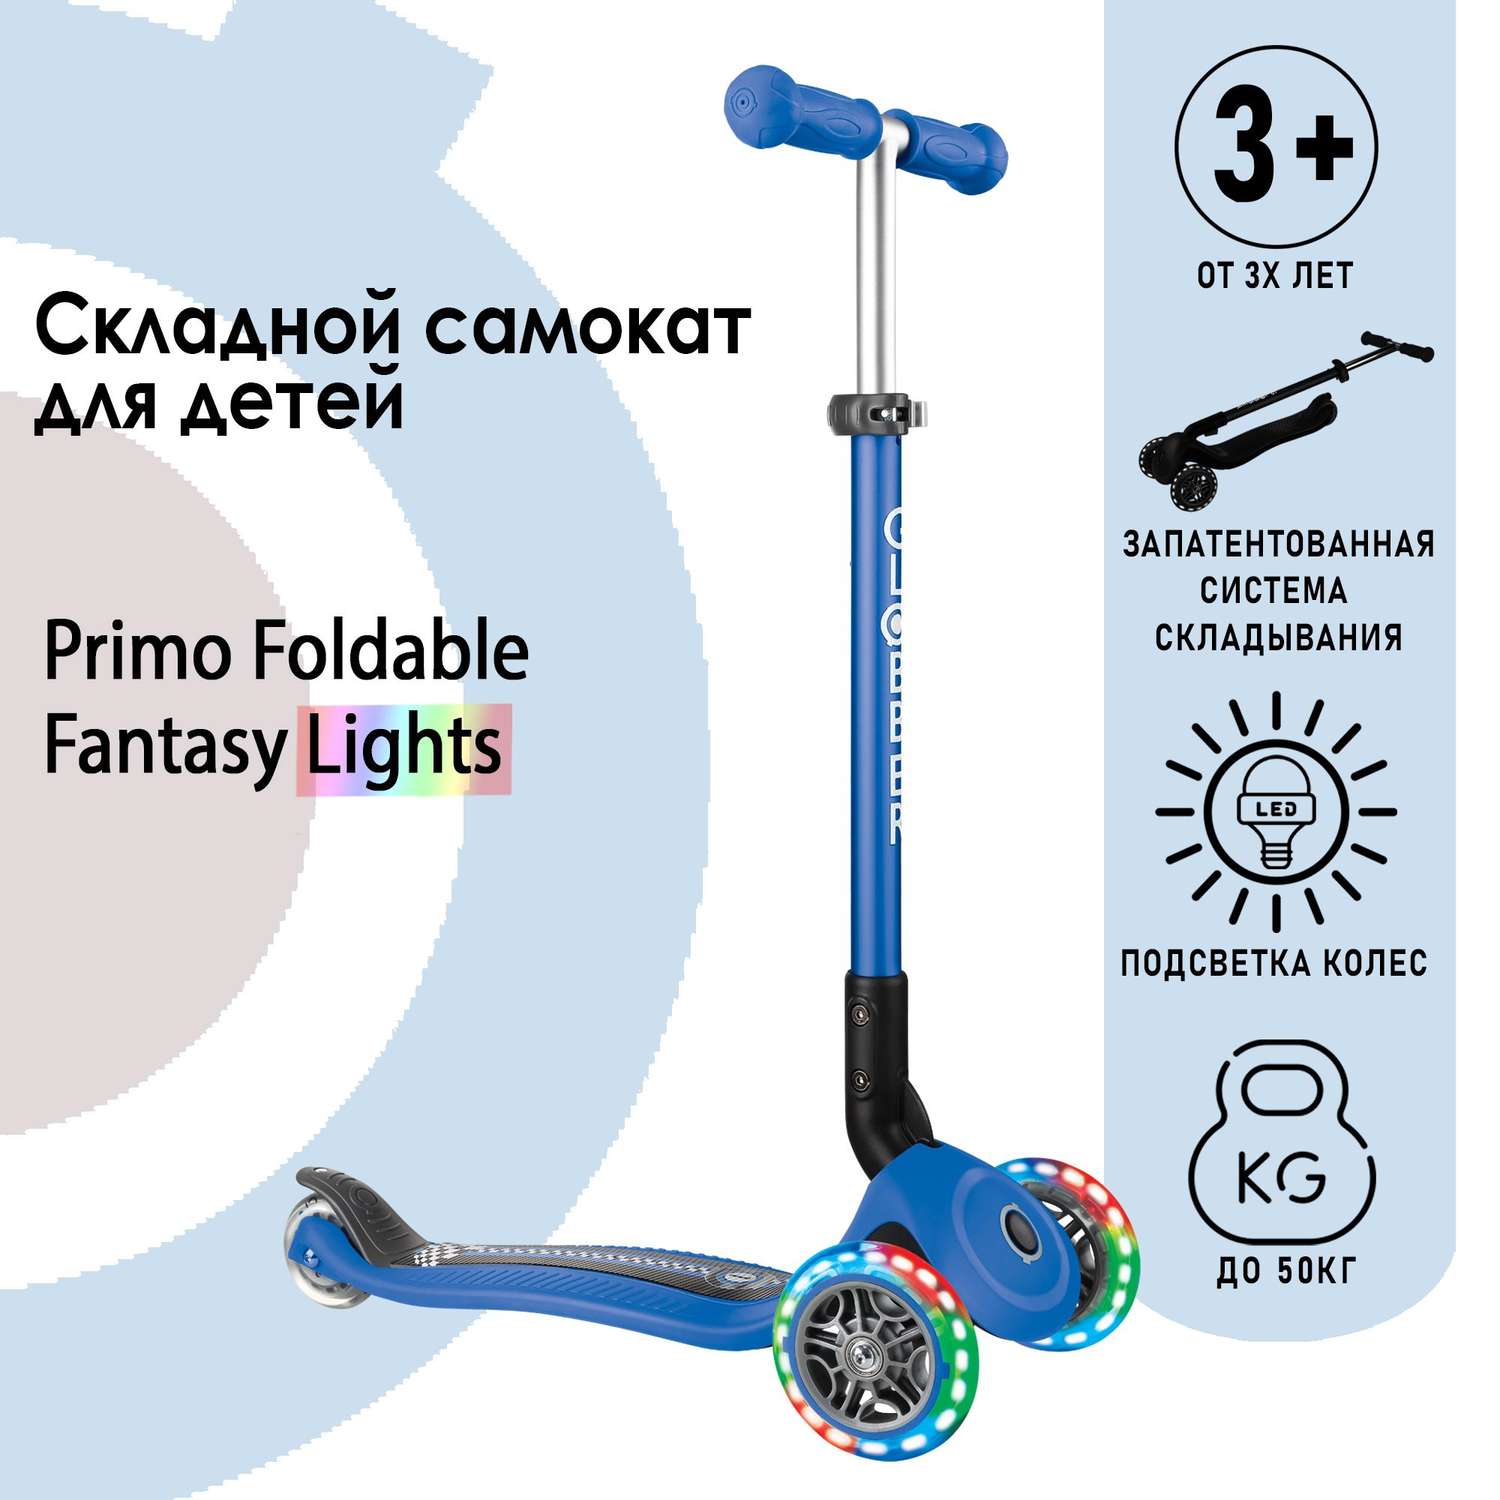 Самокат Globber Primo foldable fantasy lights - фото 1